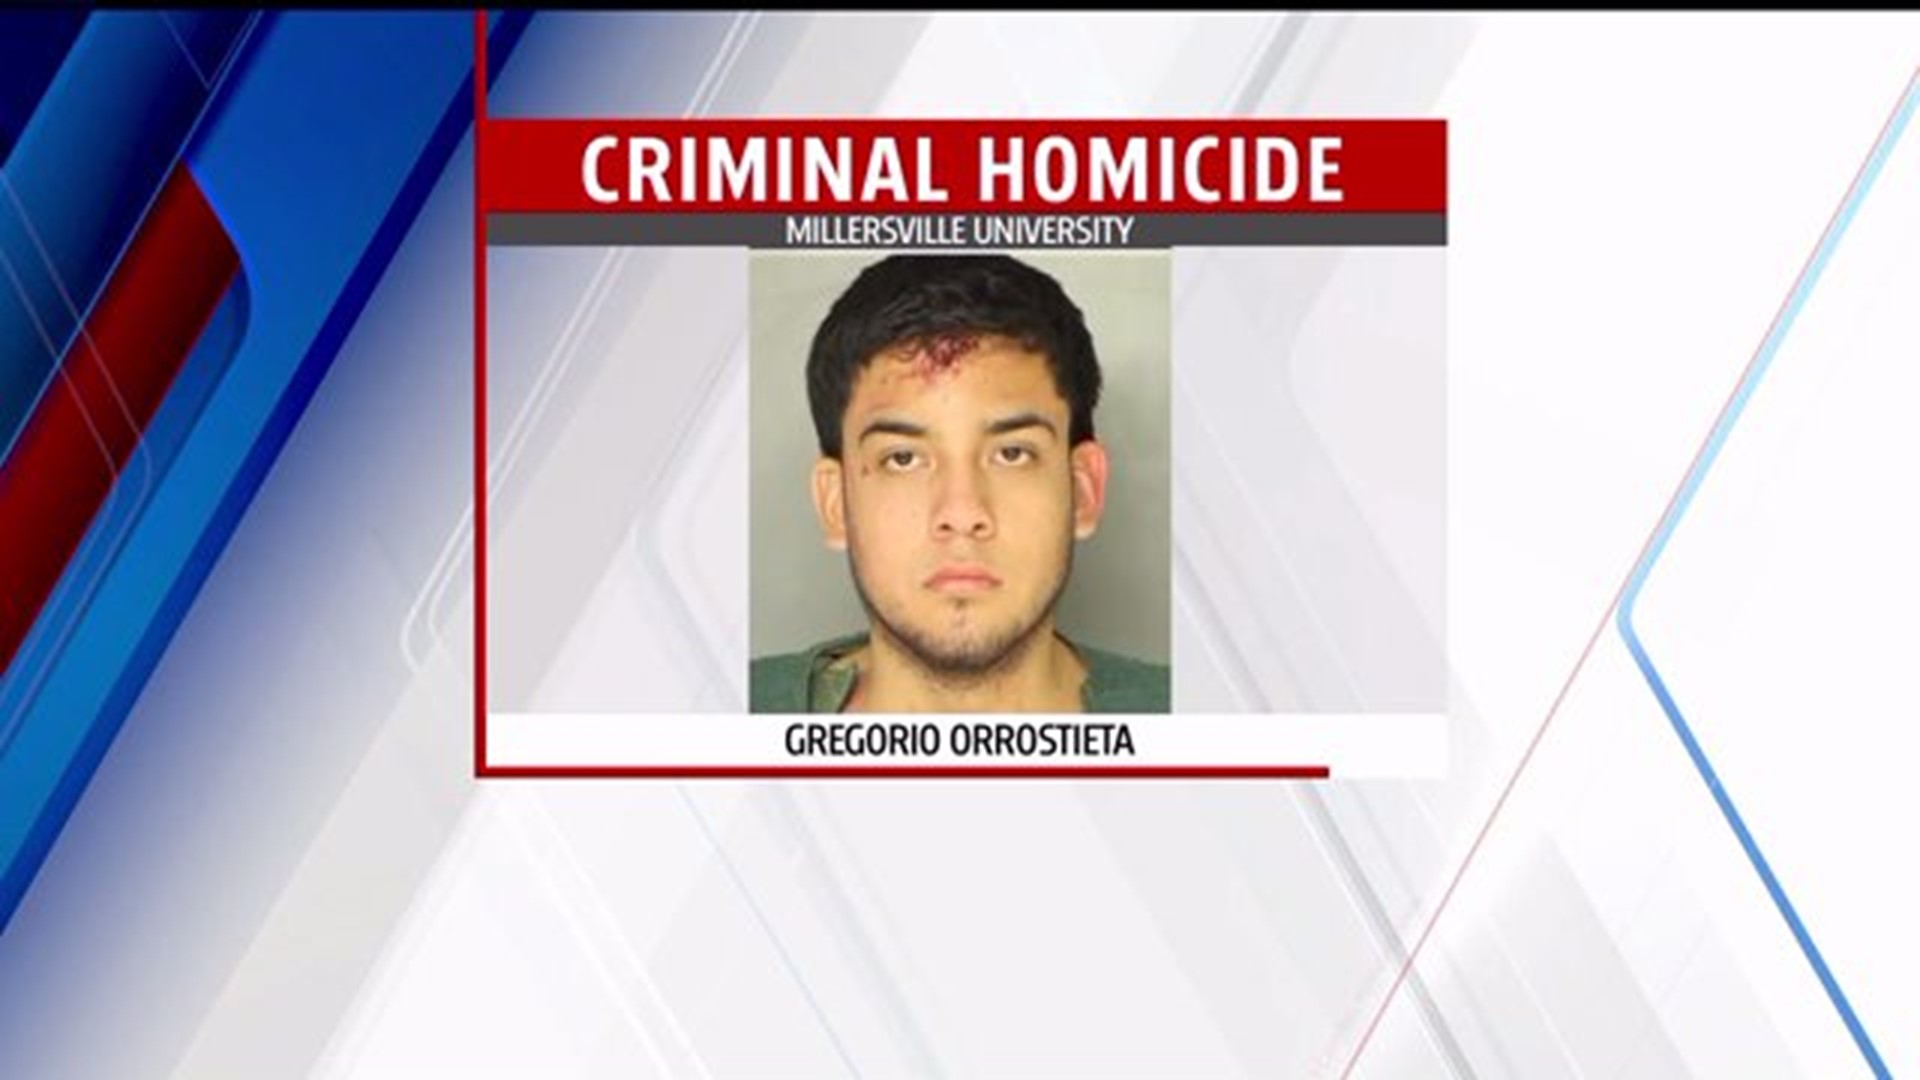 Criminal homicide charges in death of Millersville student